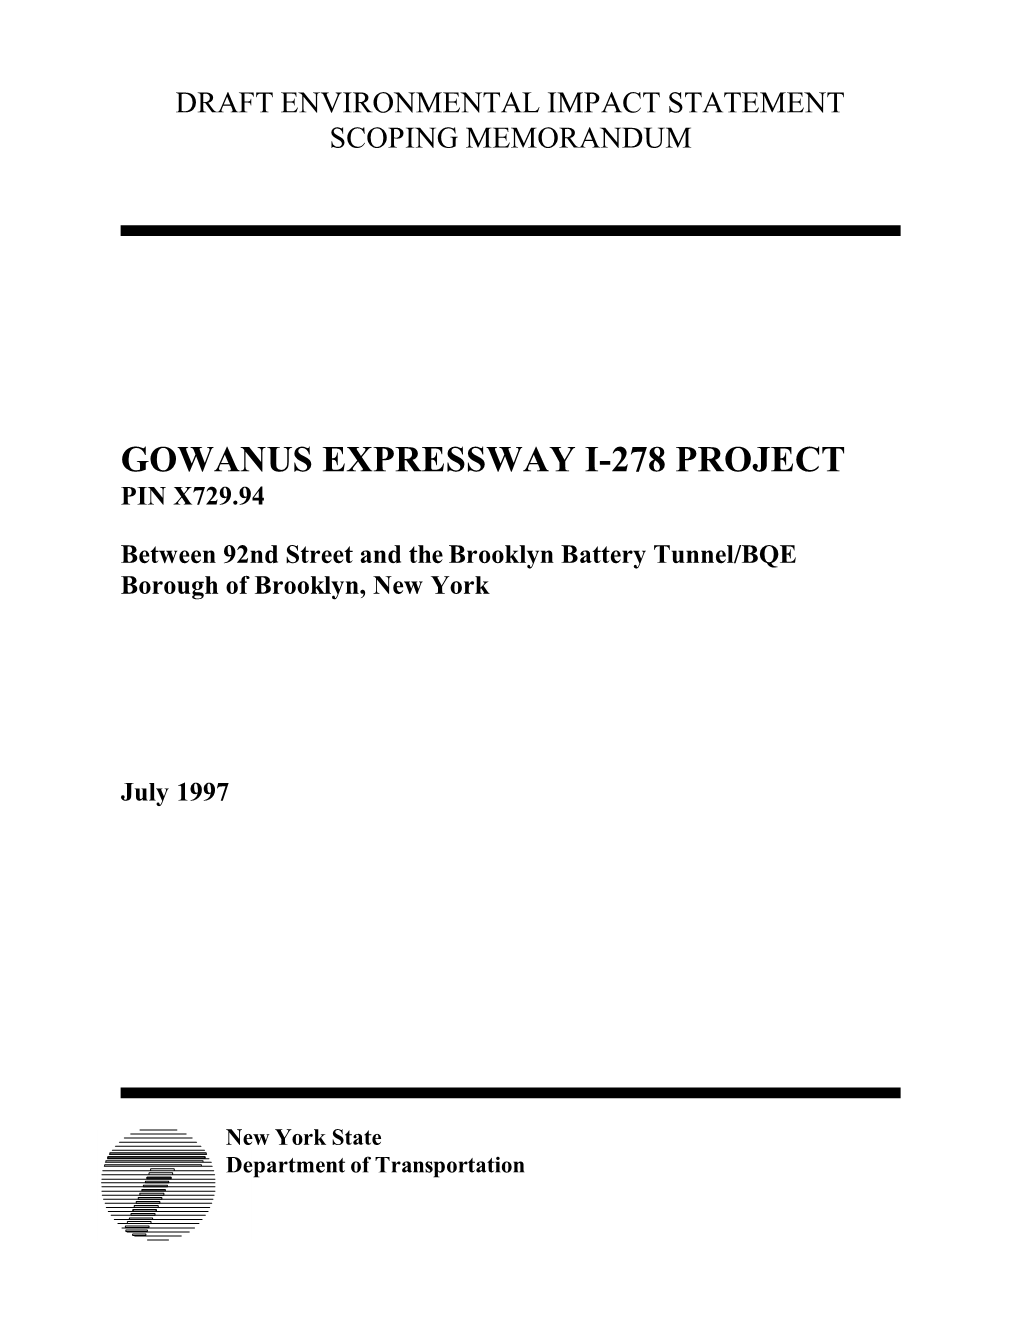 Gowanus Expressway I-278 Project Pin X729.94